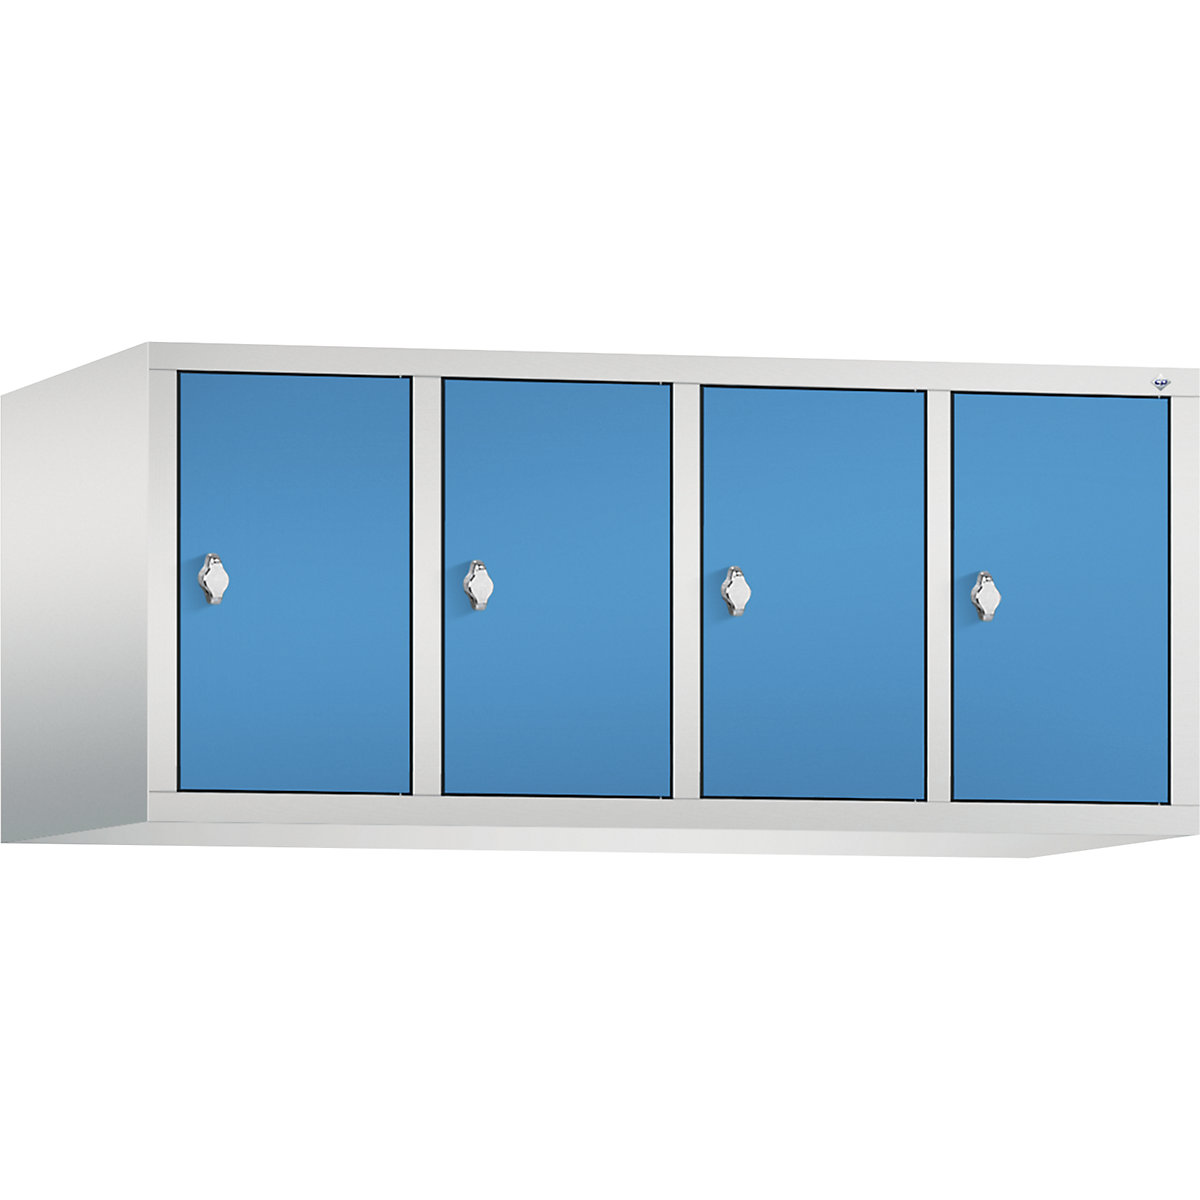 C+P – Altillo CLASSIC, 4 compartimentos, anchura de compartimento 300 mm, gris luminoso / azul luminoso